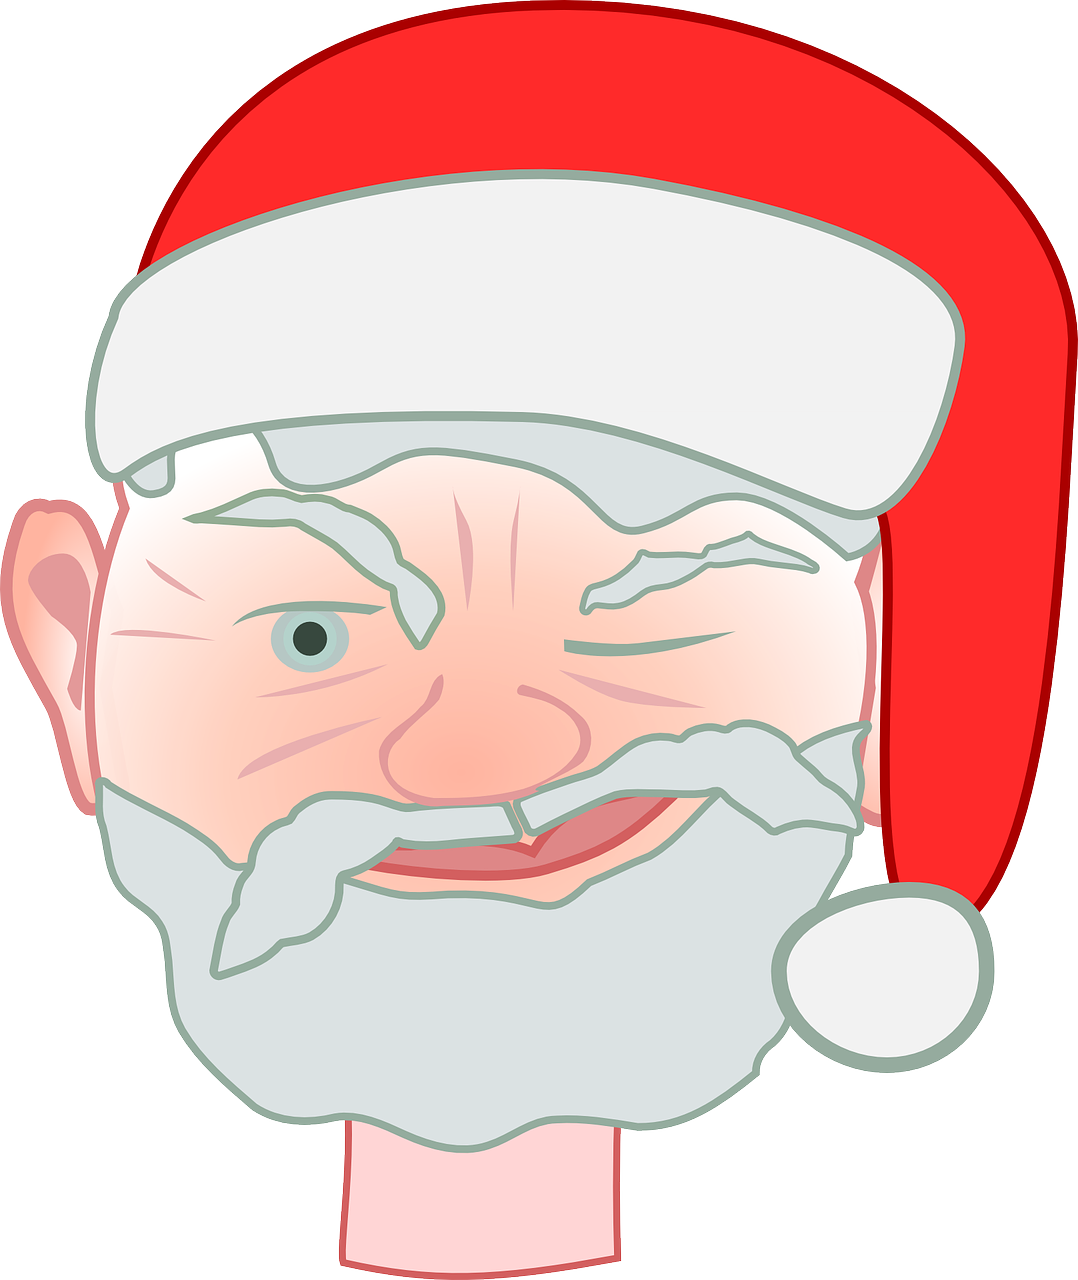 Santa Winking - Say No To Drugs (2020x2400)